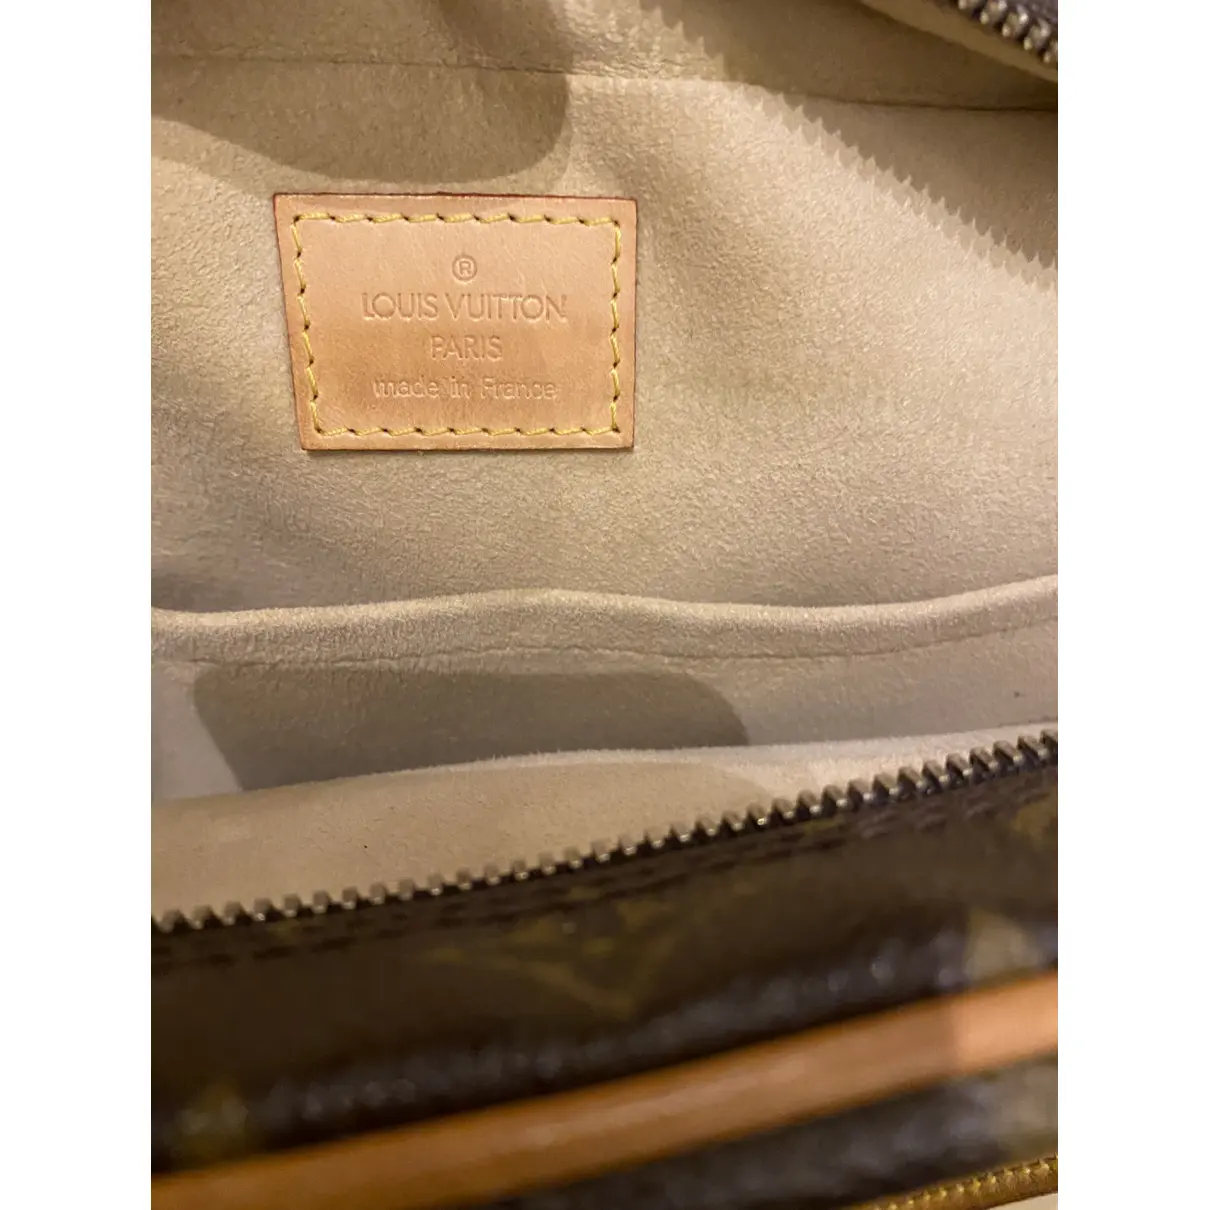 Buy Louis Vuitton Manhattan leather handbag online